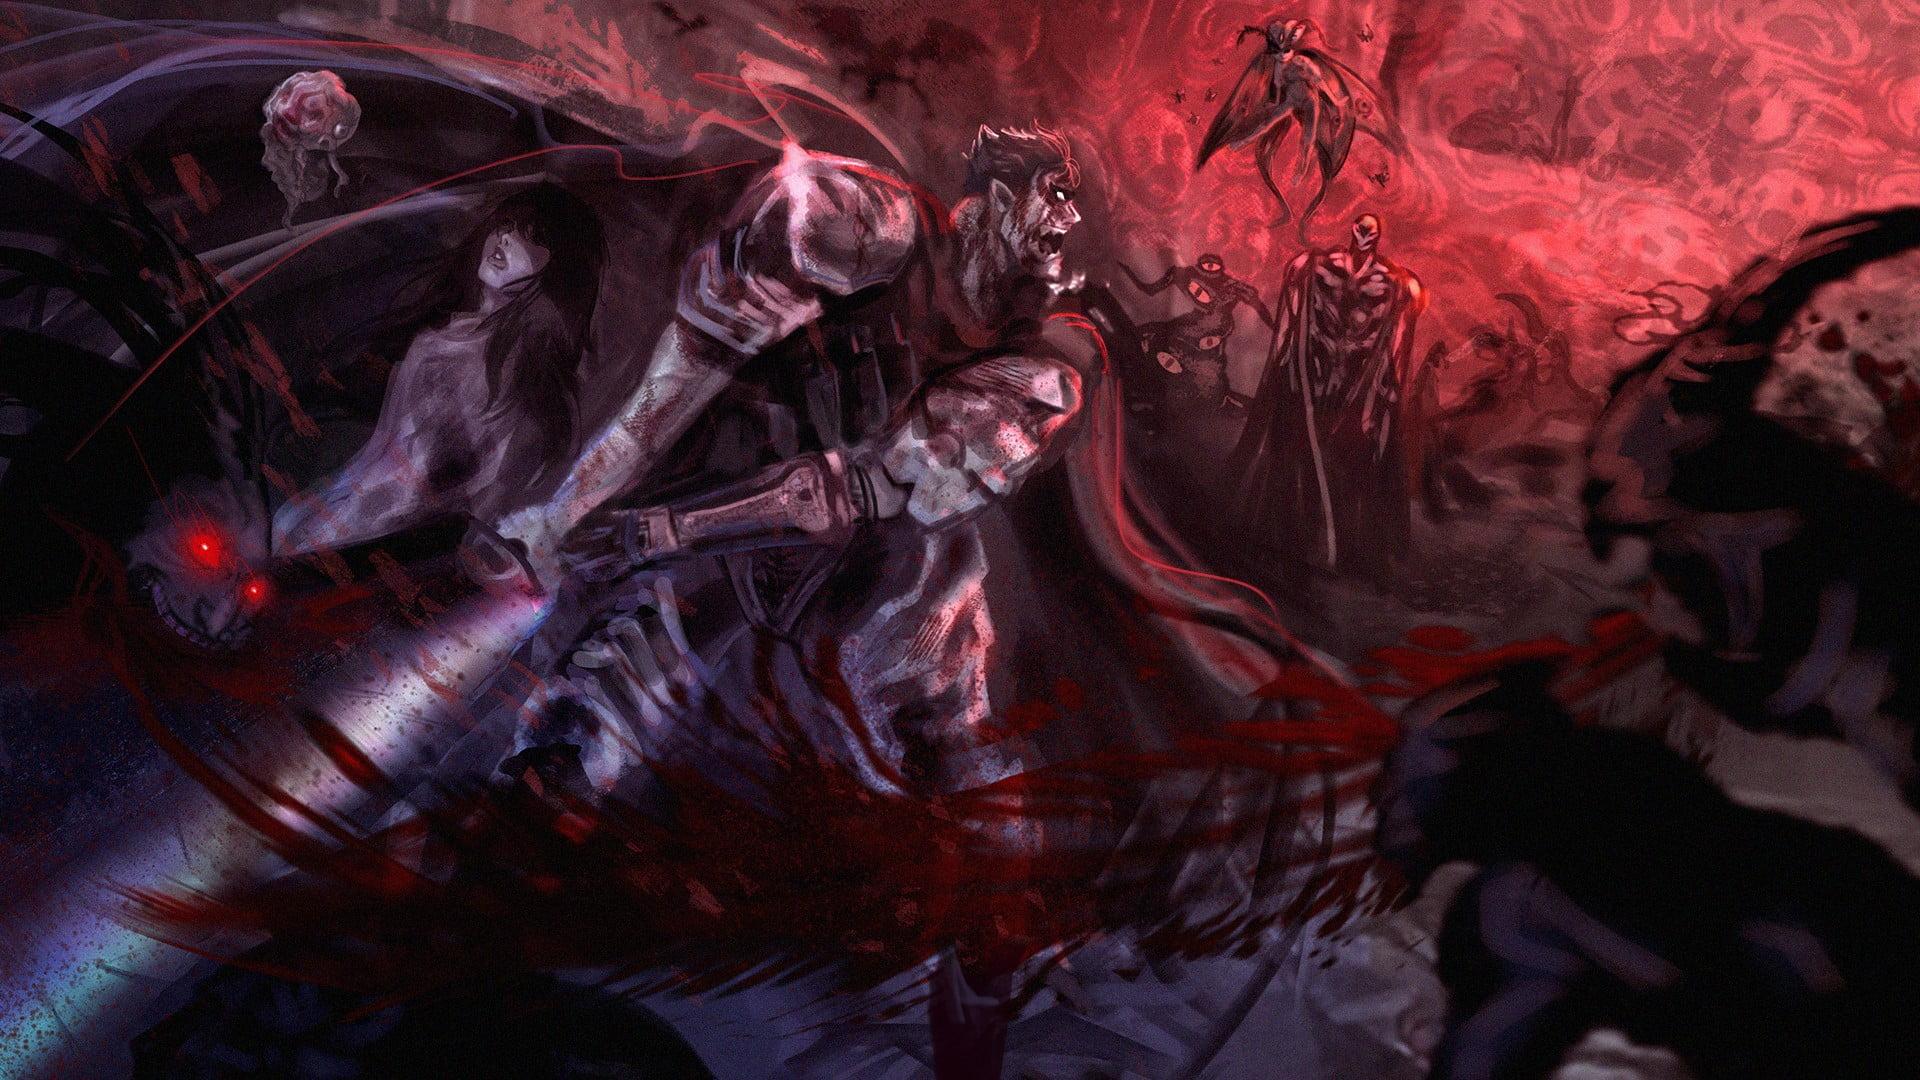 Red and black animated character wallpaper, Berserk, Black Swordsman